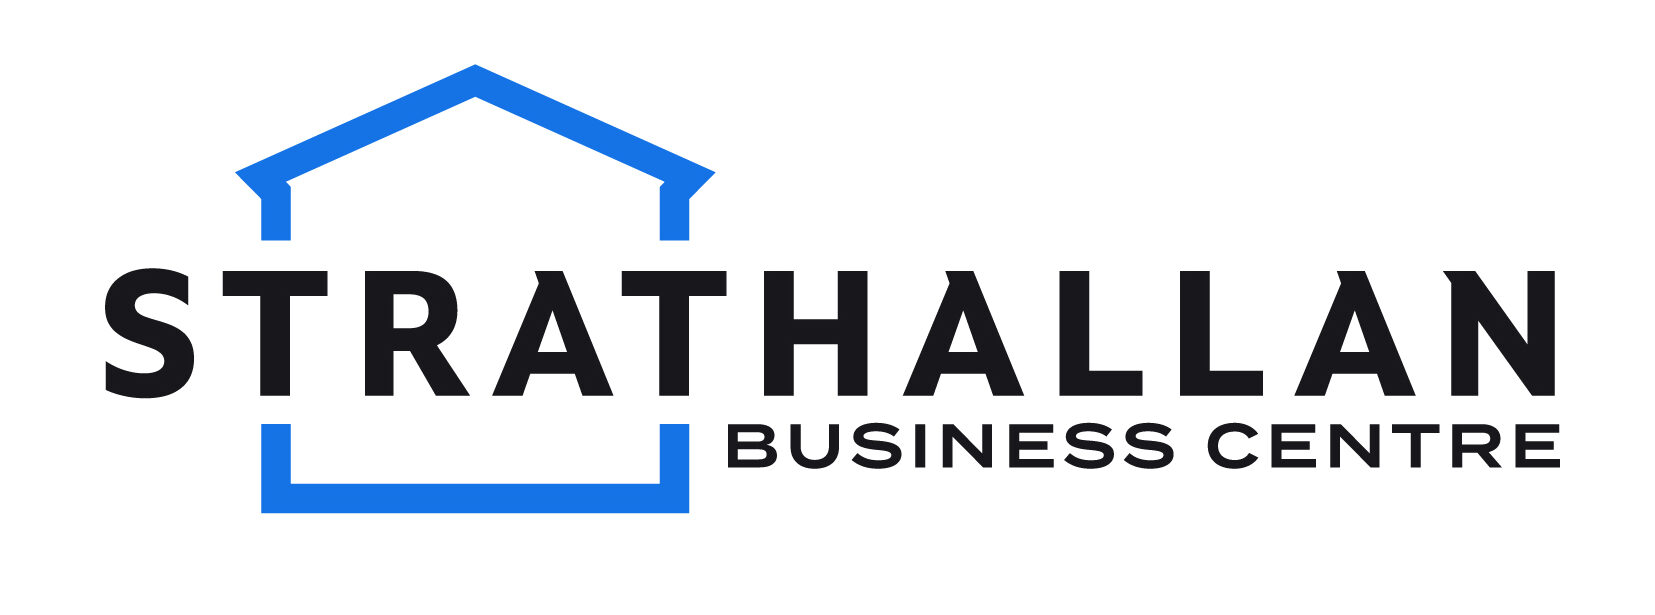 Strathallan Business Centre logo